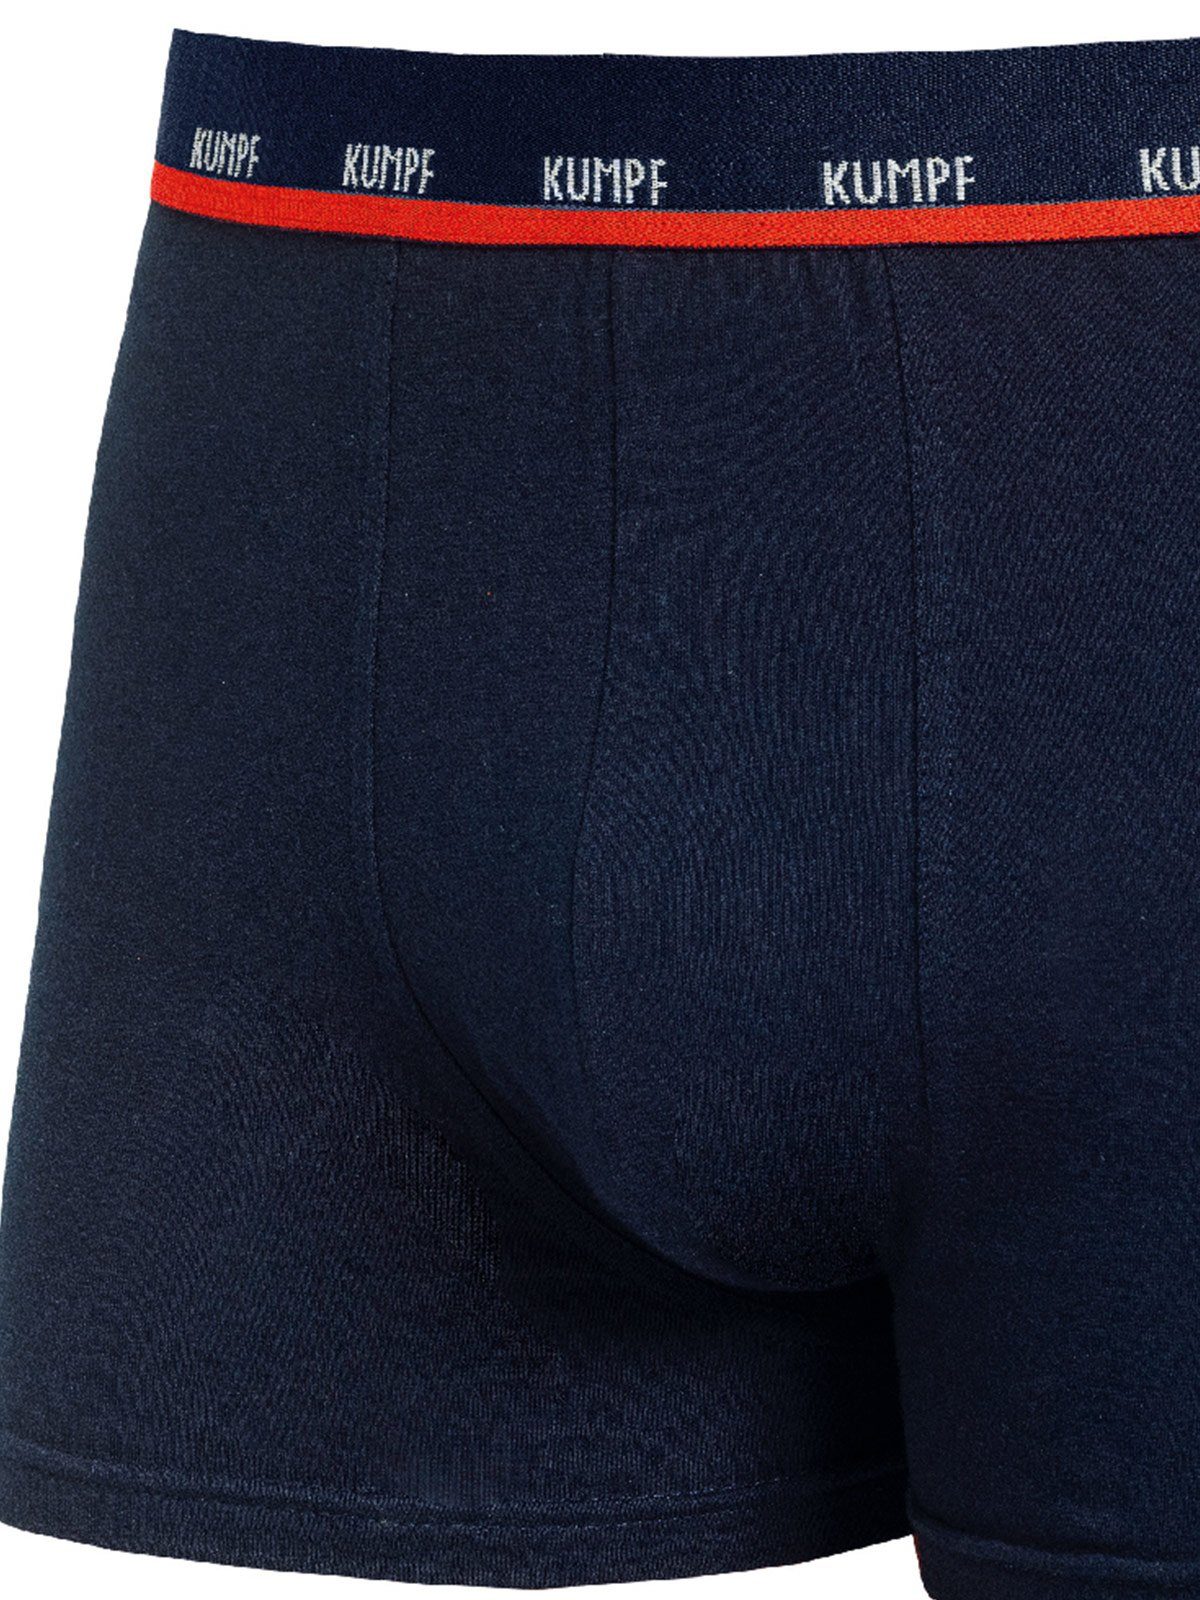 mit Pack Materialmix Stretch navy Herren Gummibund KUMPF Cotton Pants 3-St) (Packung, 3er Pants Retro